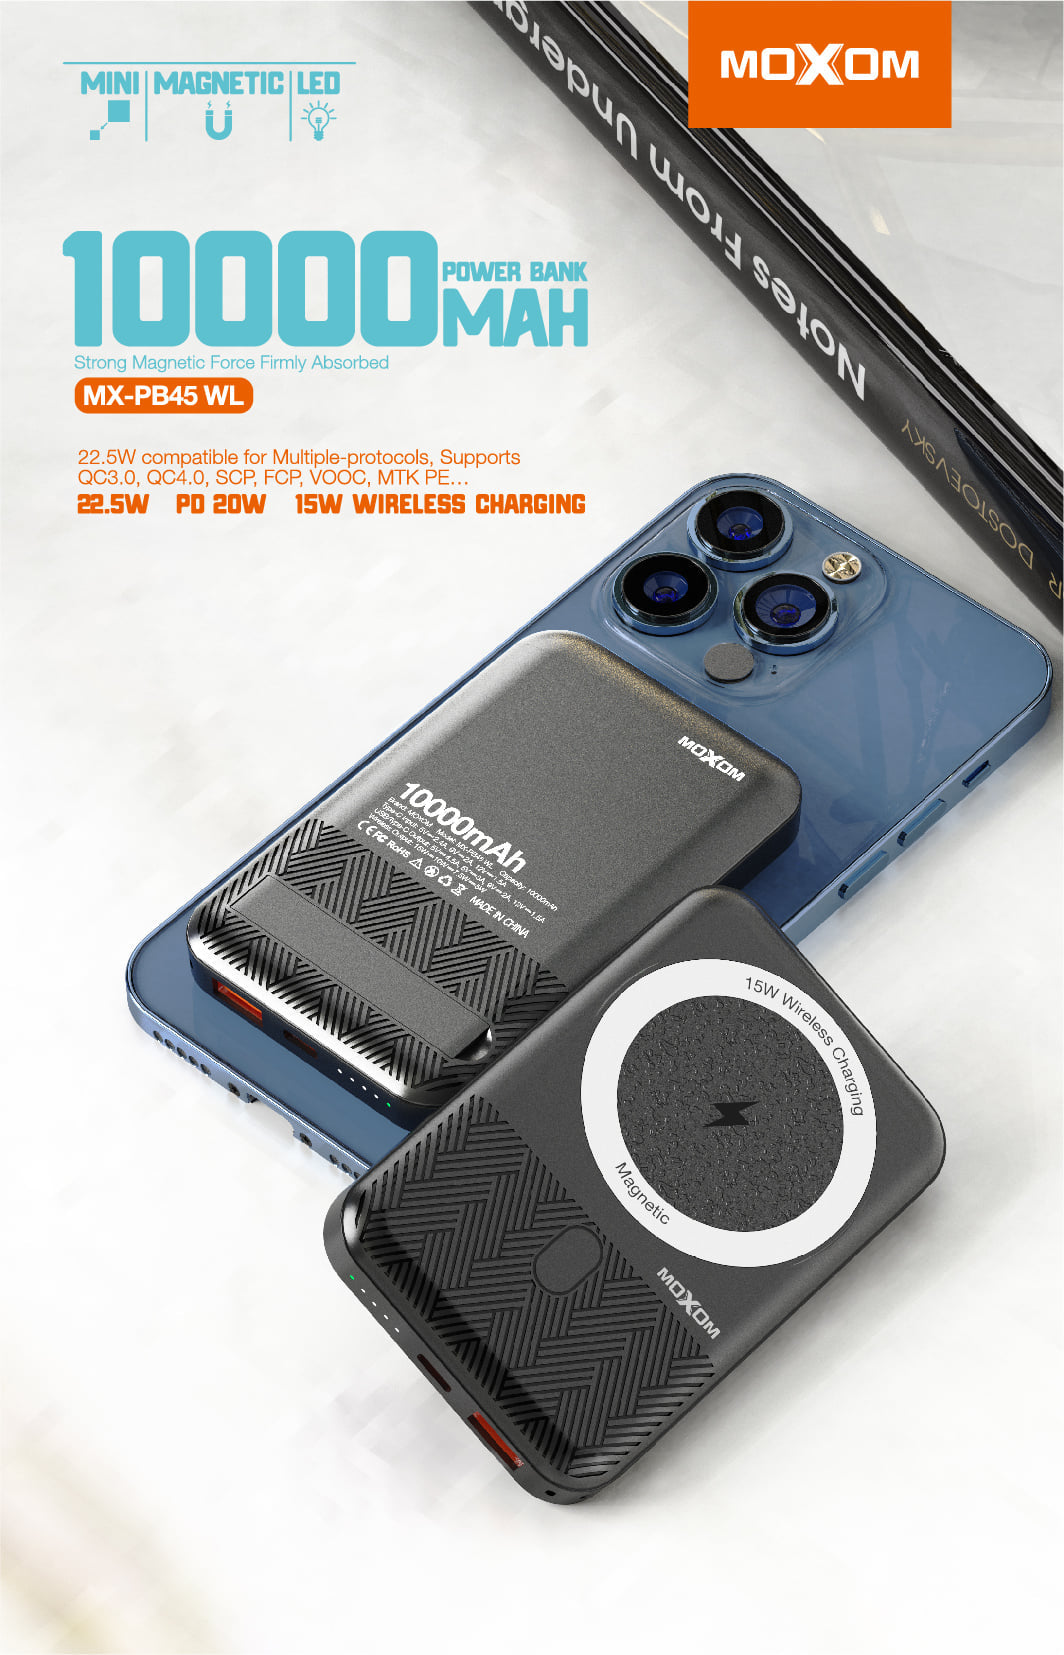 Moxom Mini Magnetic LED 10000mAh Power Bank For IPhone